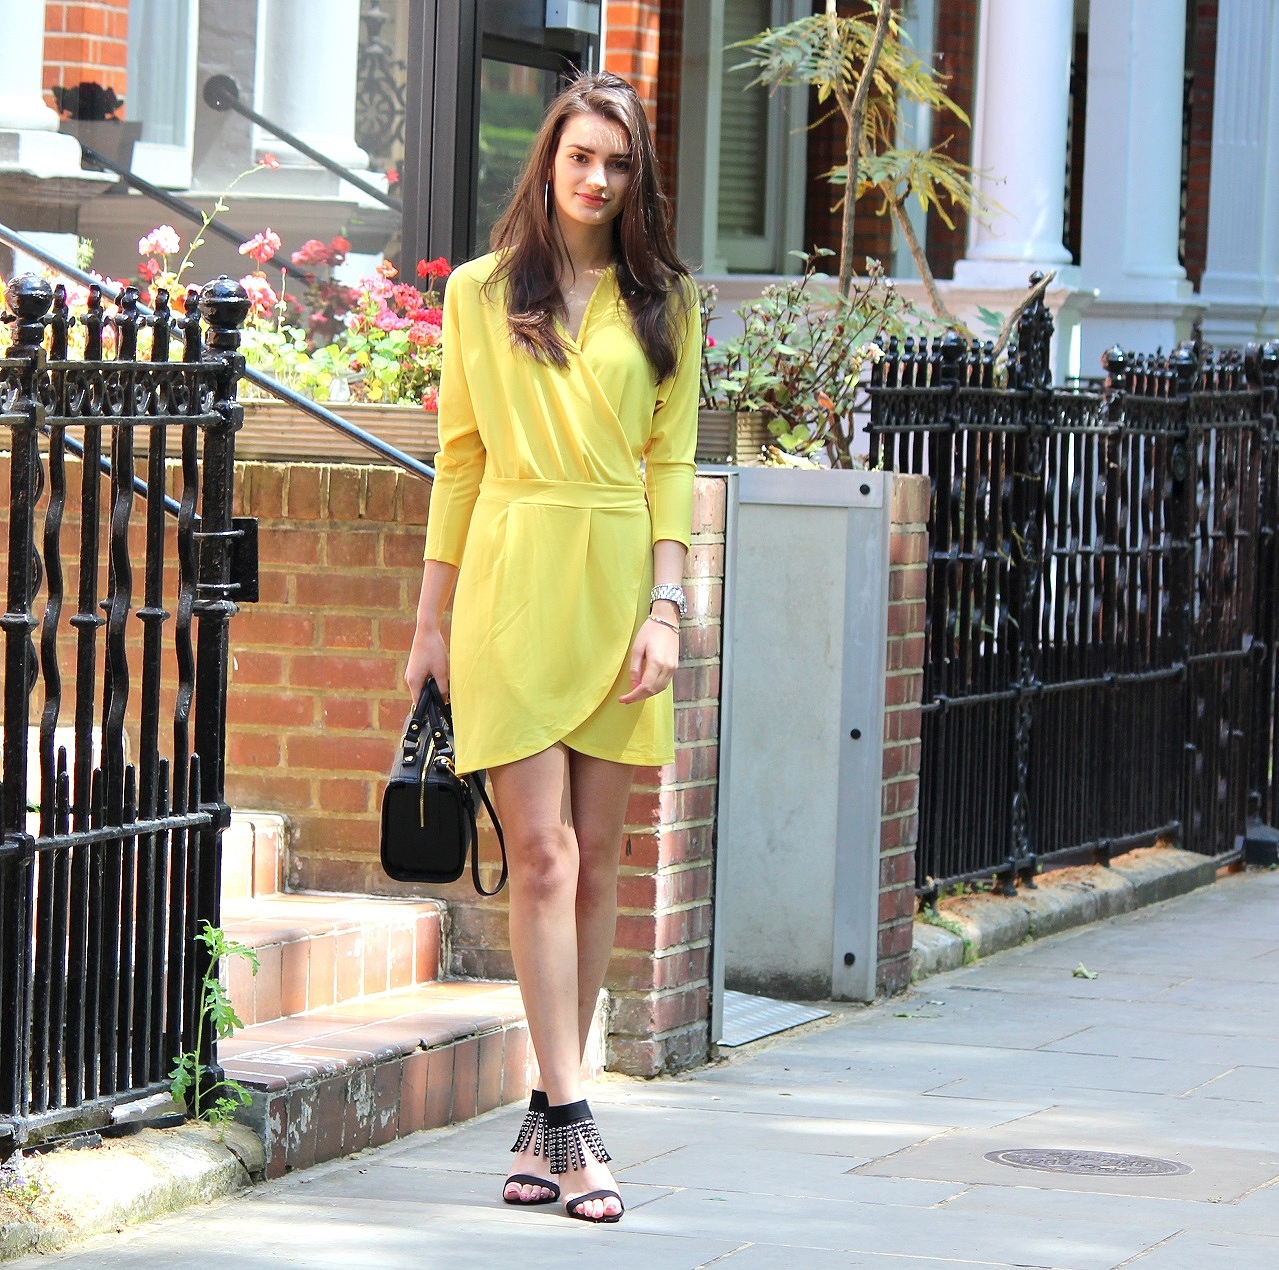 peexo-fashion-blogger-wearing-yellow-wrap-around-dress-and-black-fringe-heels-and-black-bag